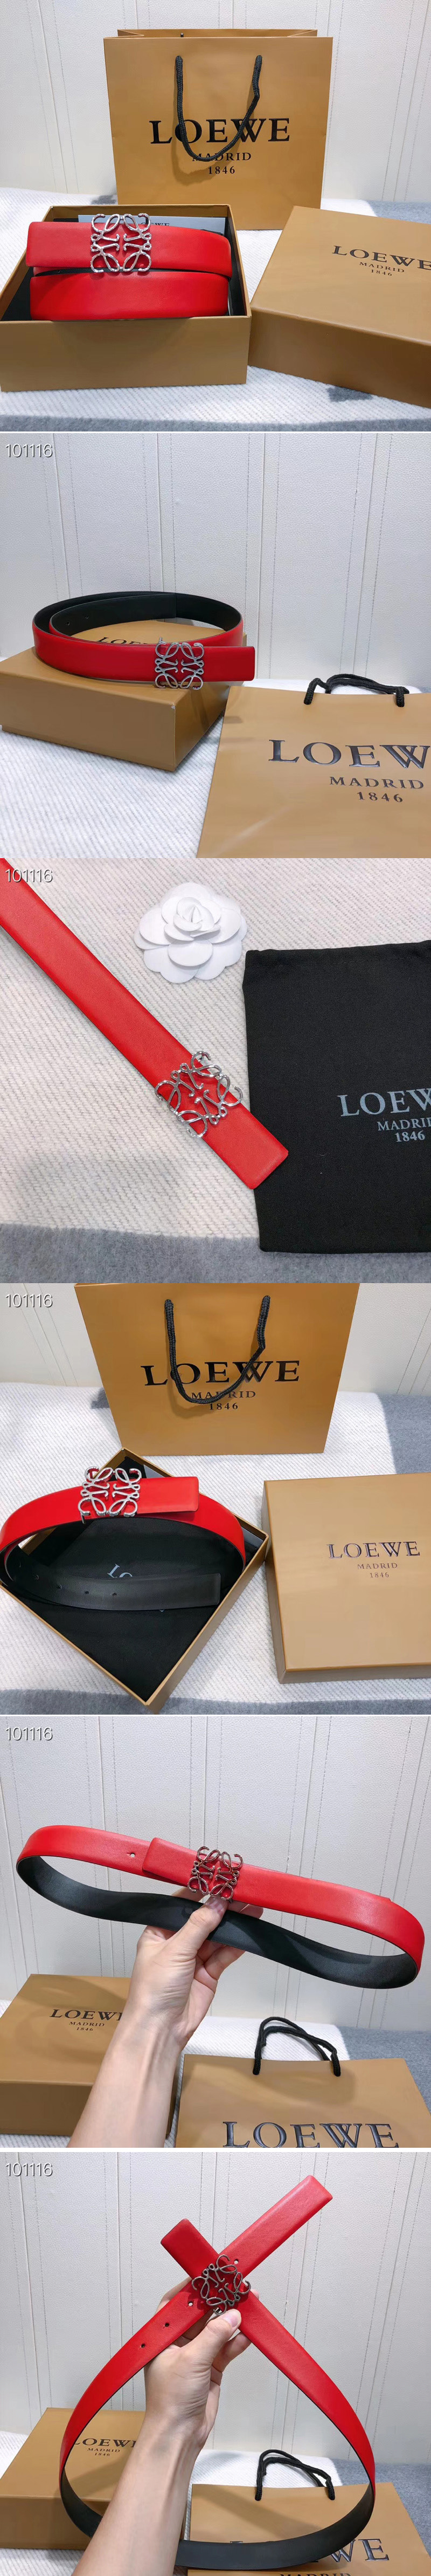 Replica Loewe Belts